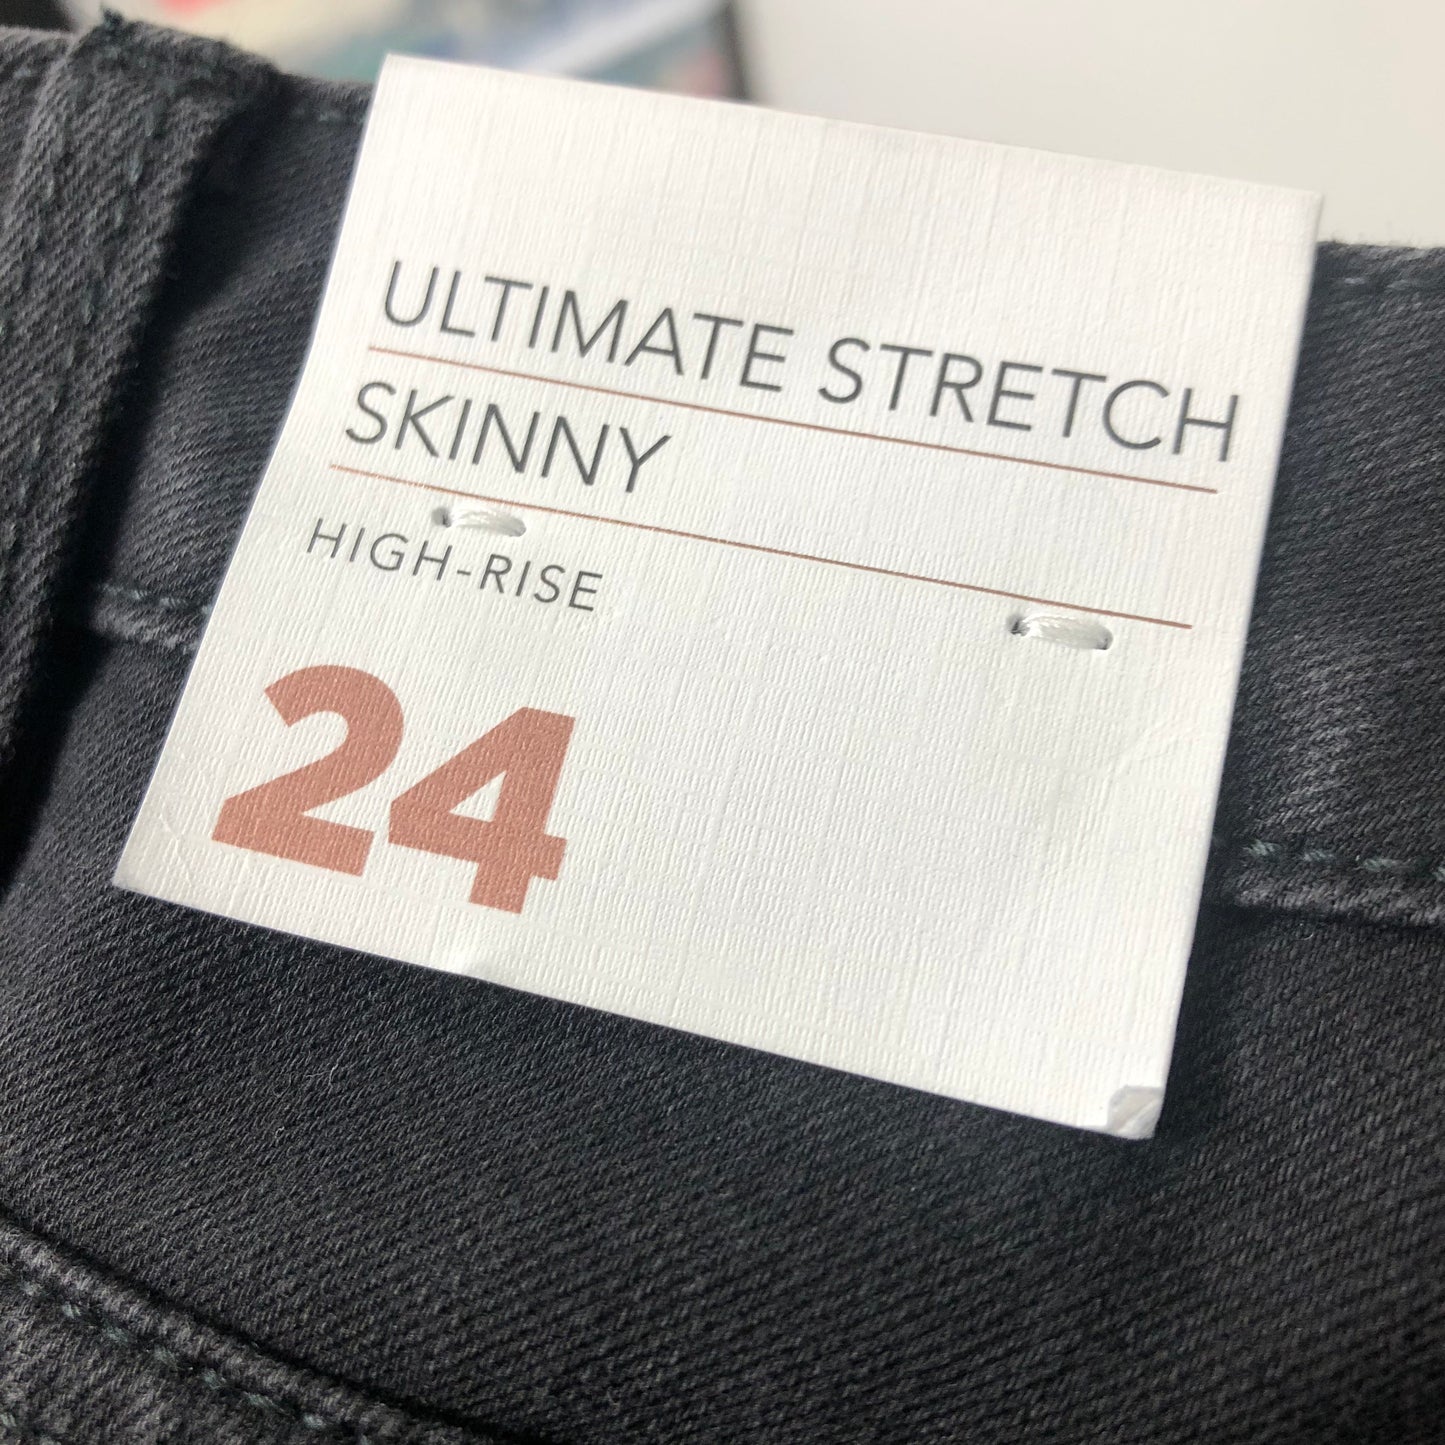 Jeans Skinny By Lane Bryant  Size: 24